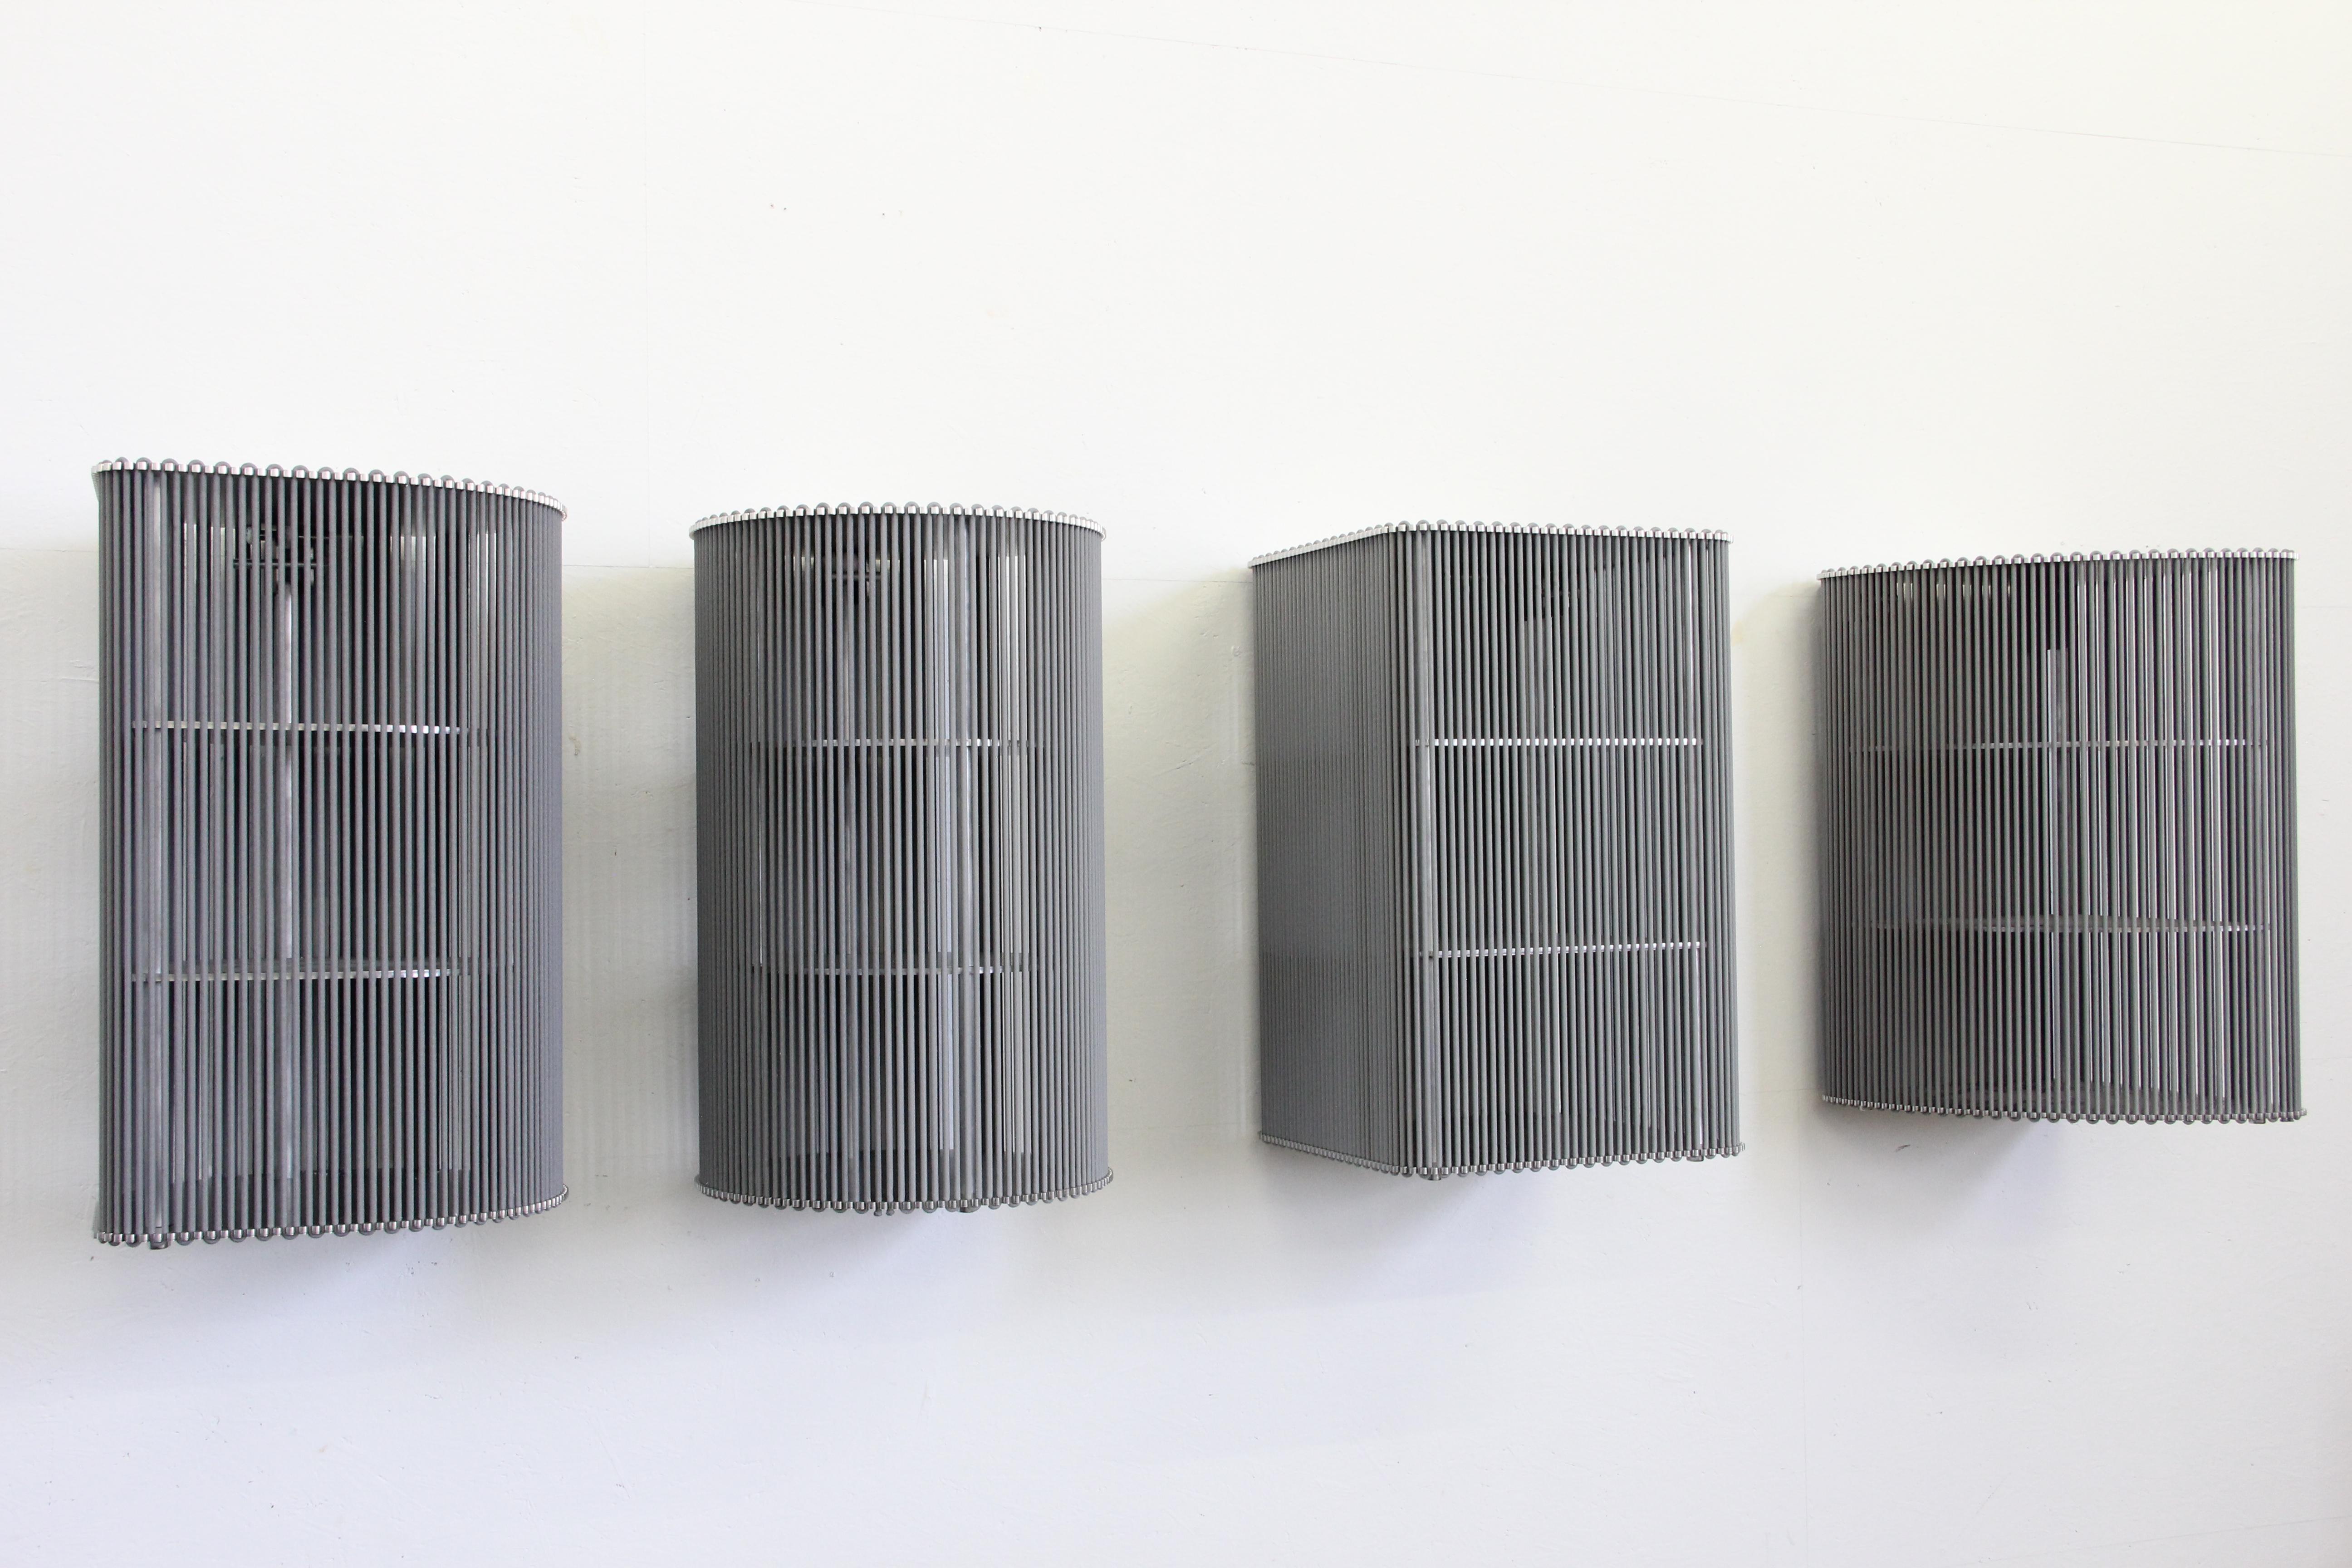 Aluminum Coil Cabinet Wall Mounted by Bram Kerkhofs